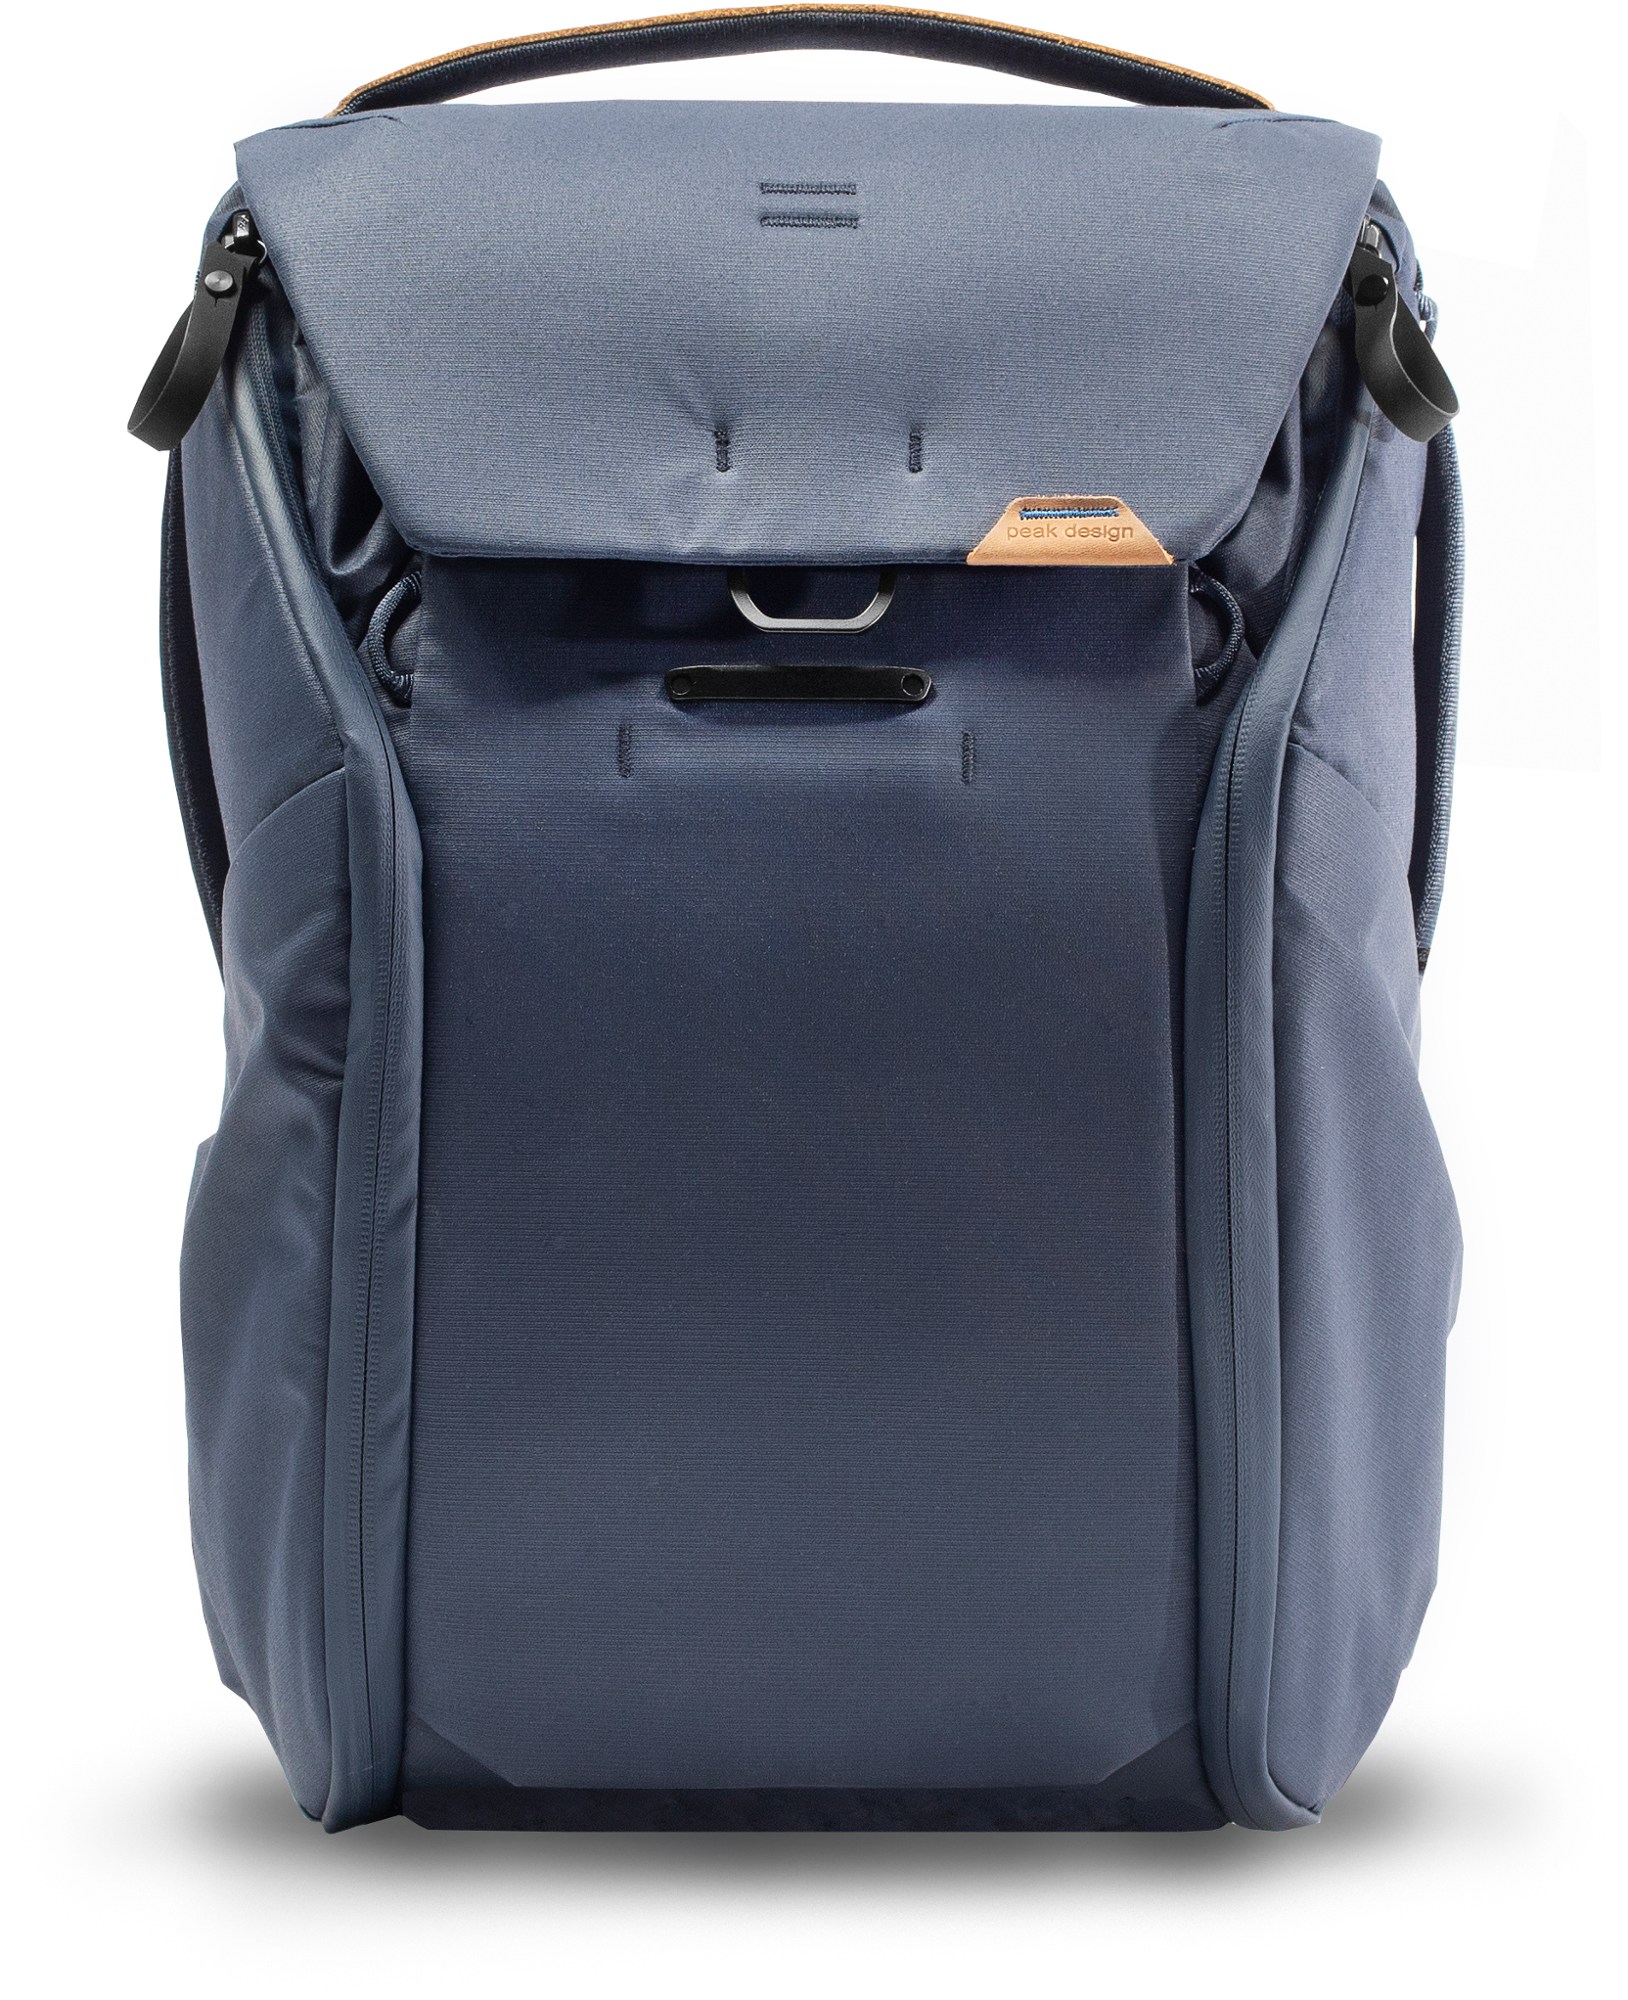 Рюкзак на каждый день V2 20л Peak Design, синий рюкзак peak design the everyday backpack 20l v2 0 ash